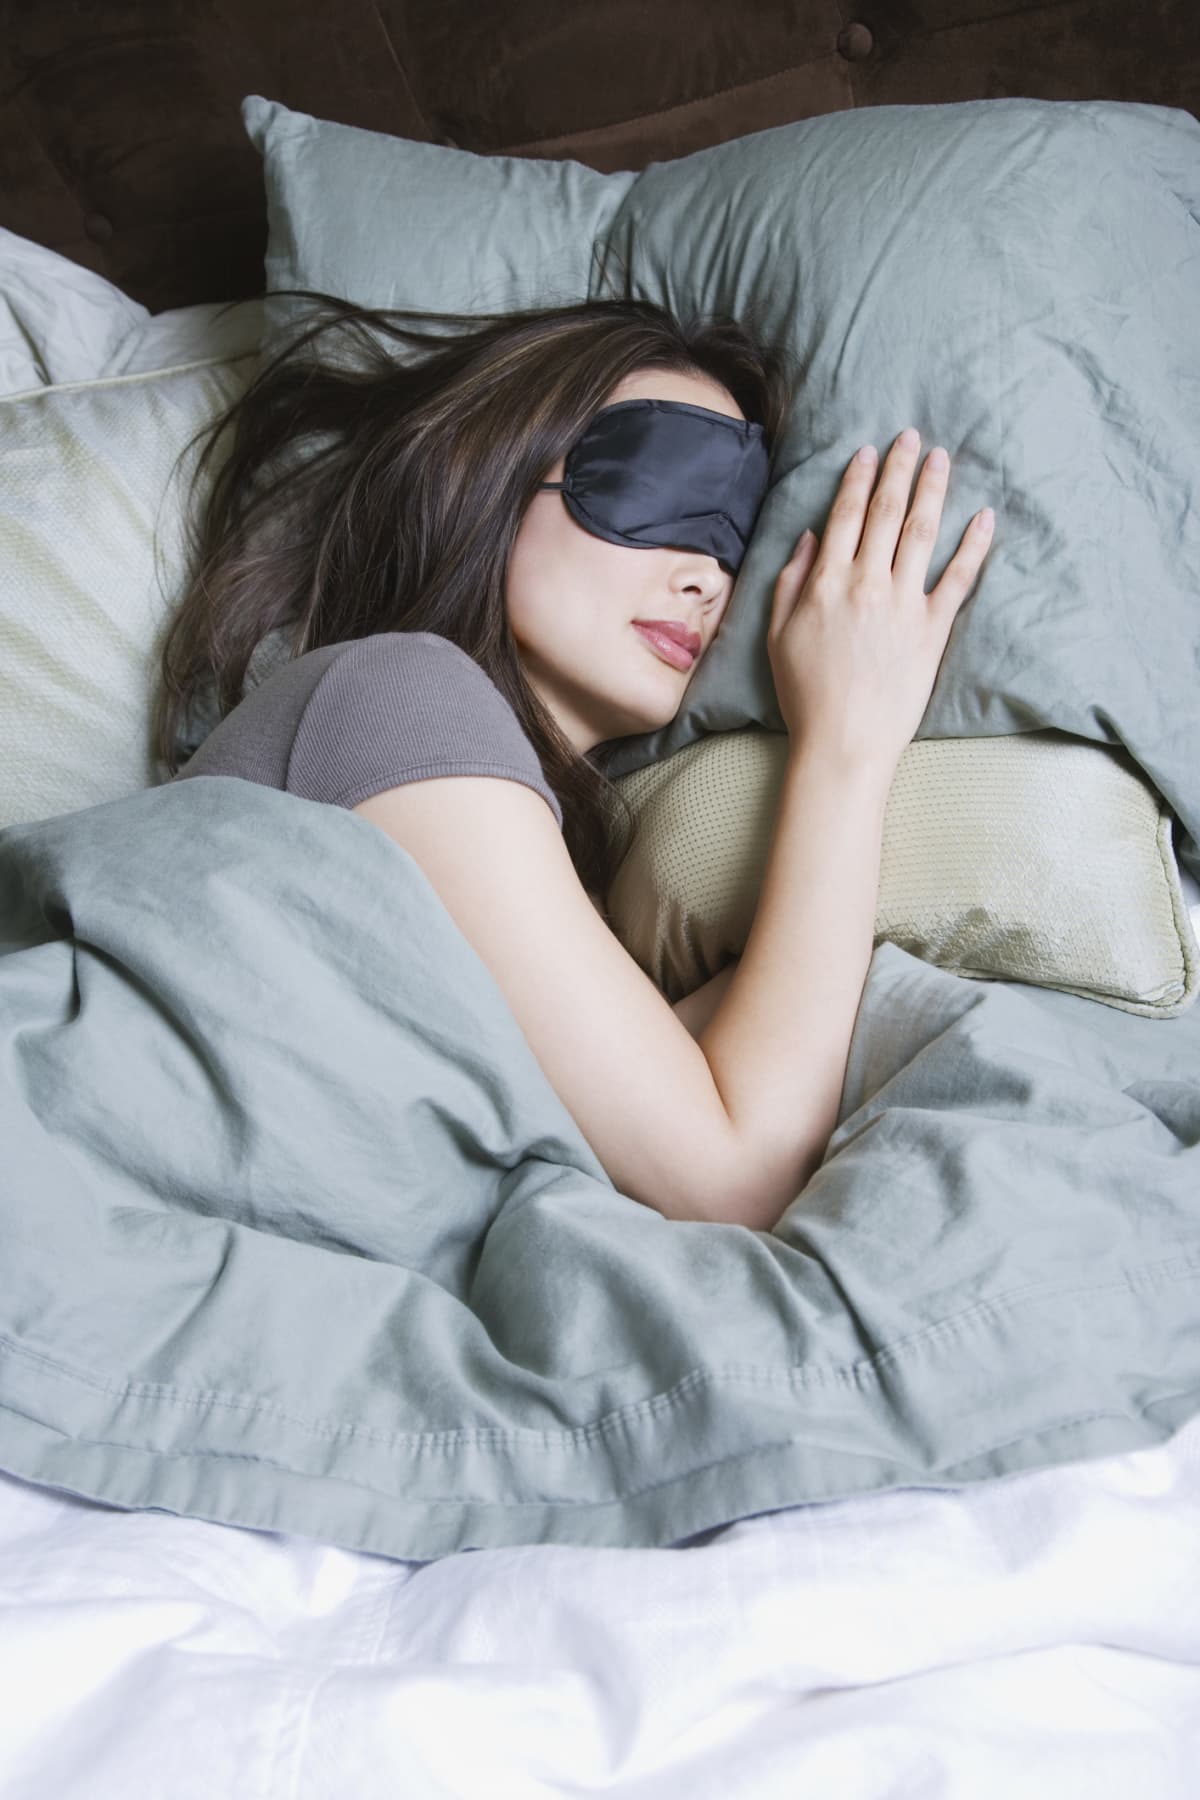 a woman sleeping with an eye sleep mask